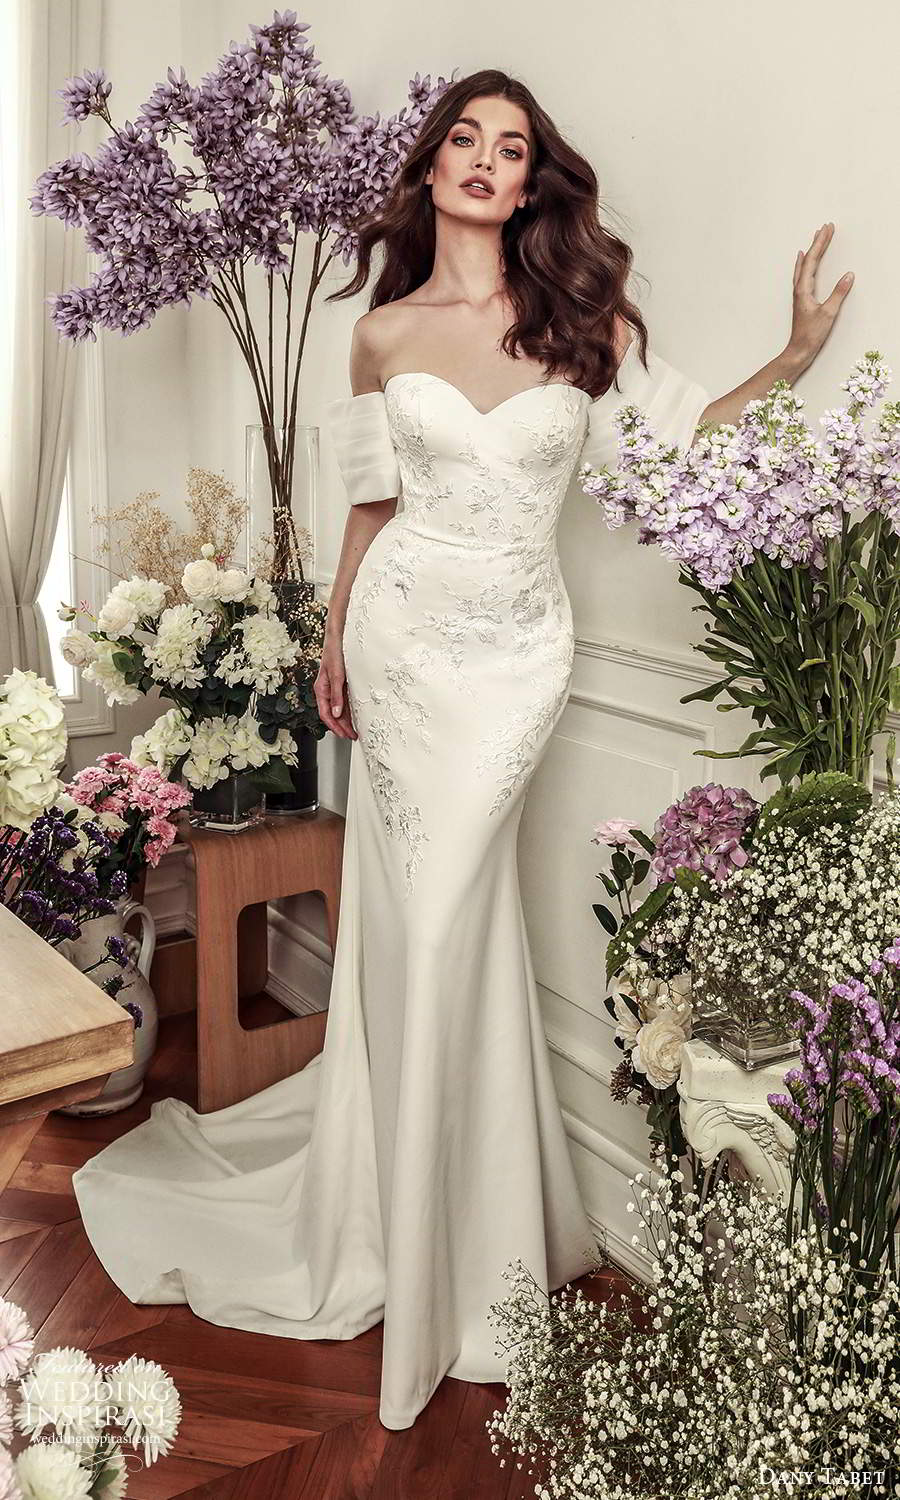 dany tabet 2021 belle fleur bridal strapless sweetheart neckline embellished minimalist sheath wedding dress chapel train (13) mv